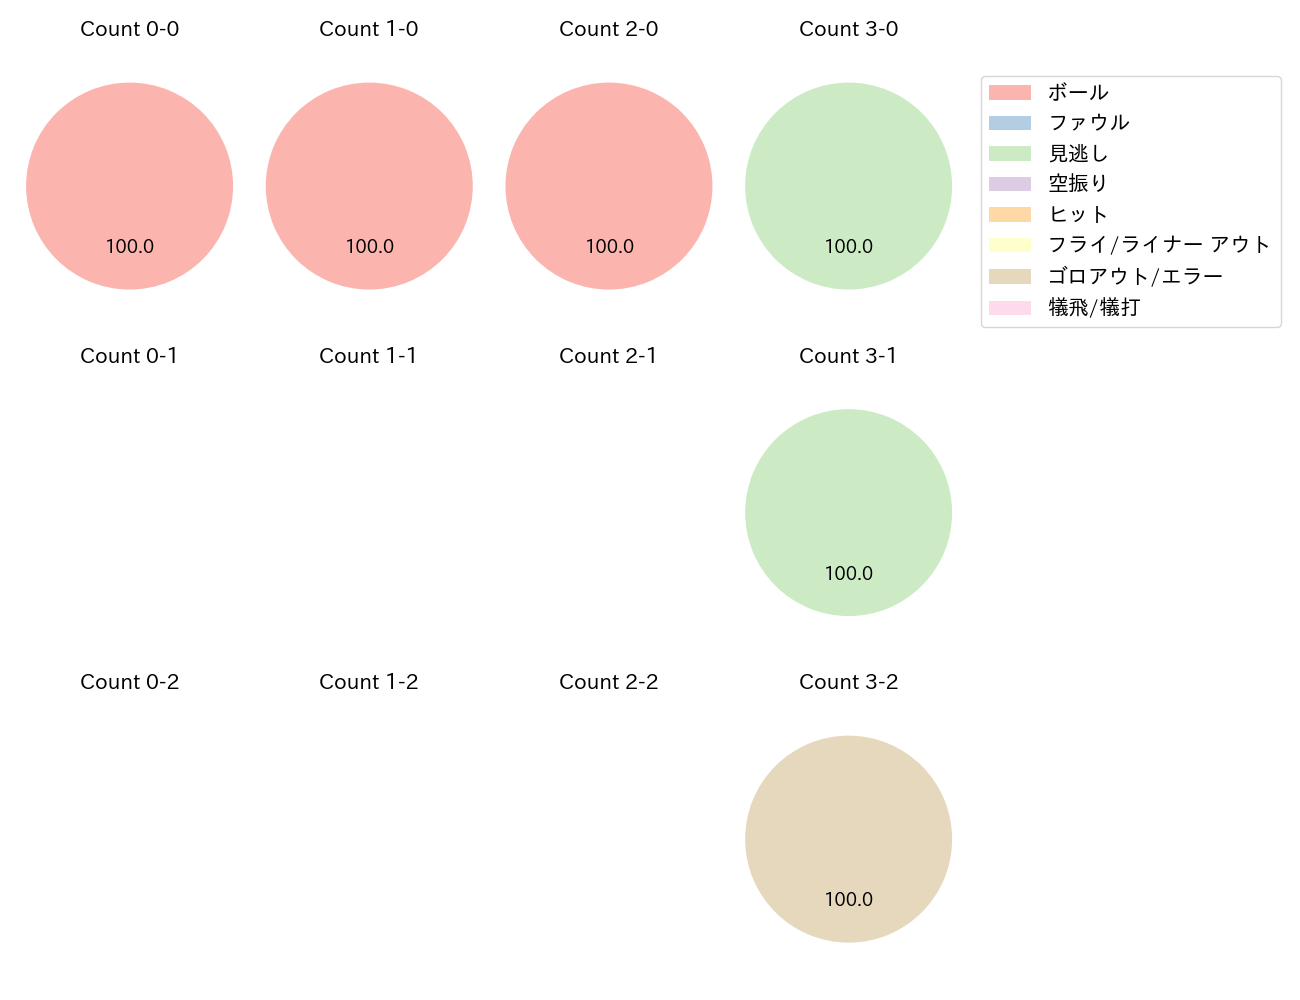 奥川 恭伸の球数分布(2021年3月)